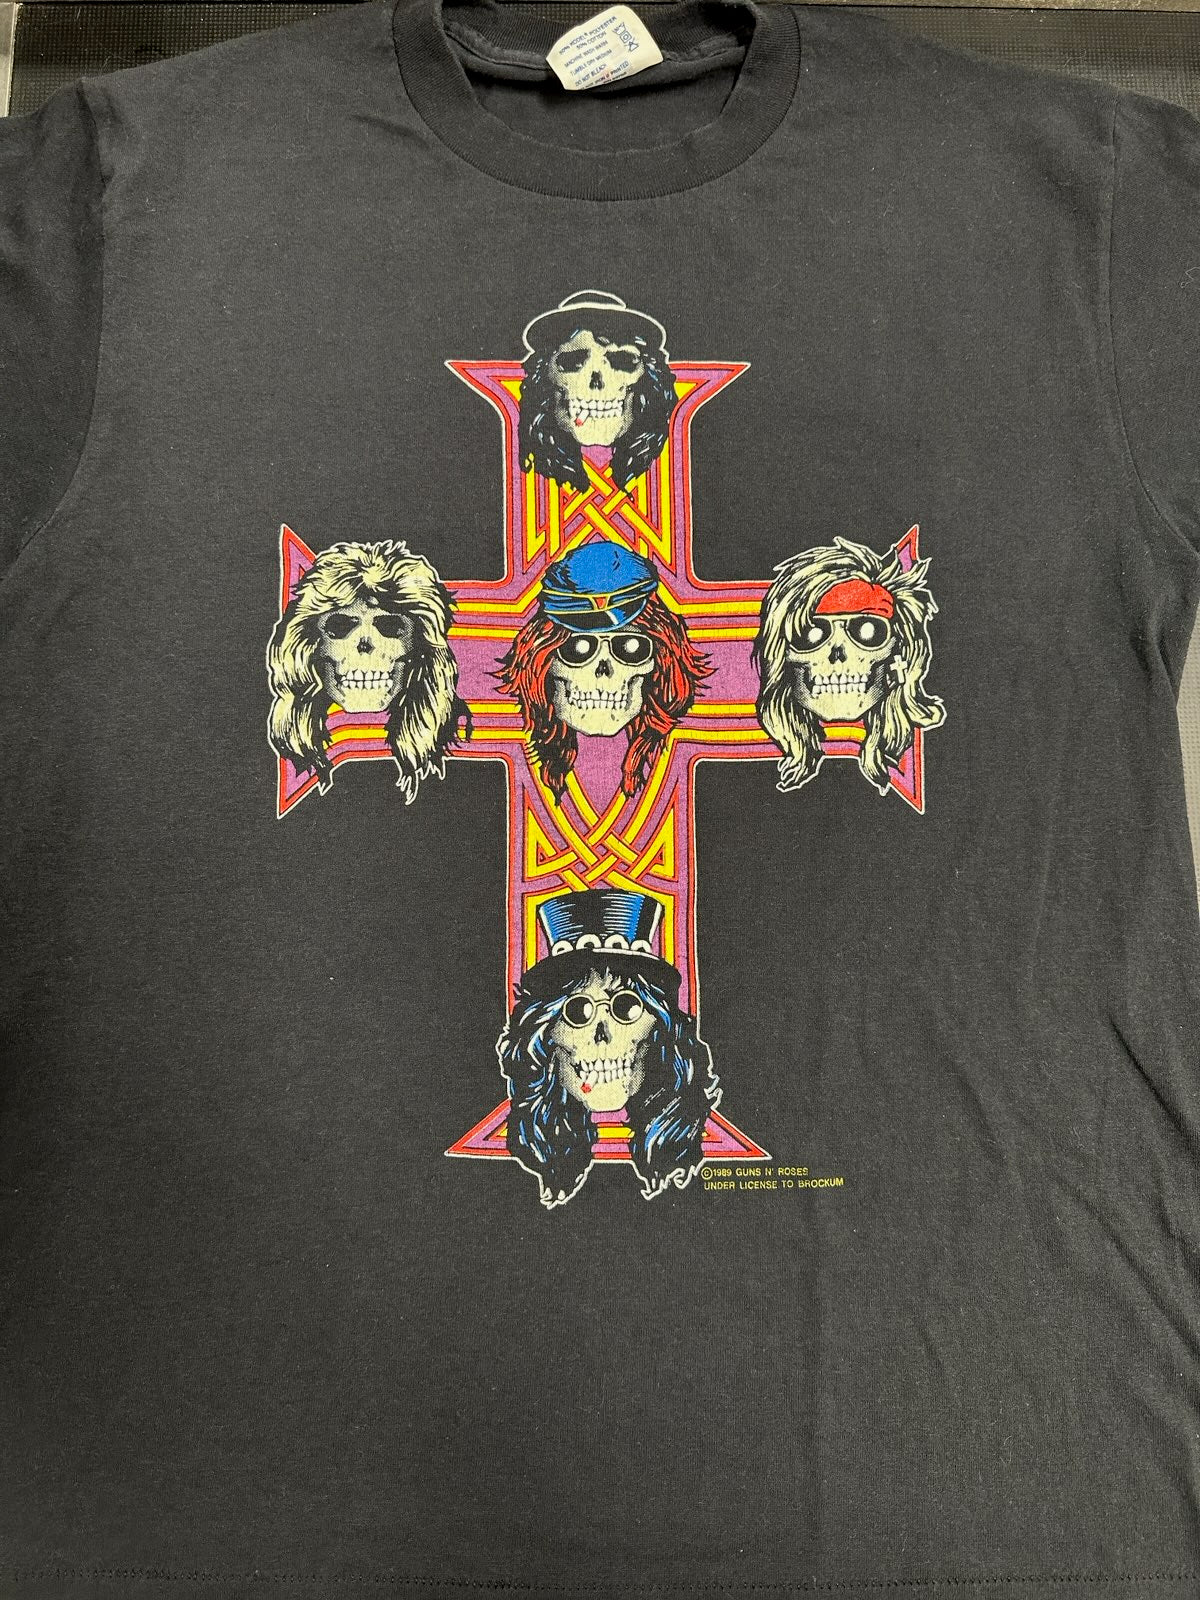 Ozzy Osbourne 1984 Bark At The Moon Tour Raglan/Baseball T-Shirt